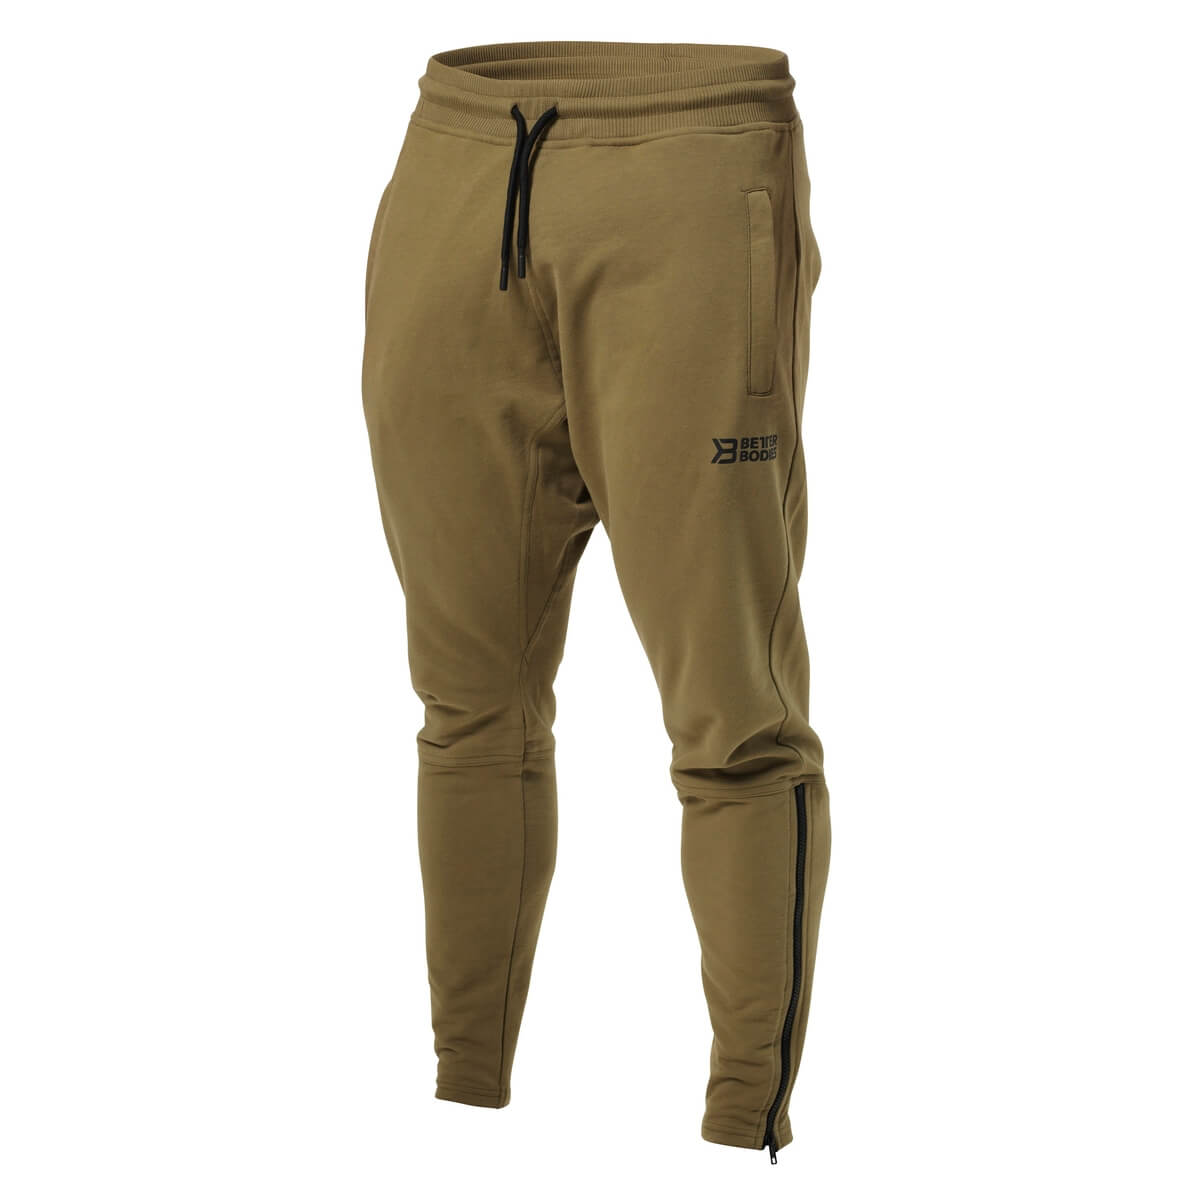 Harlem Zip Pants, military green, Better Bodies